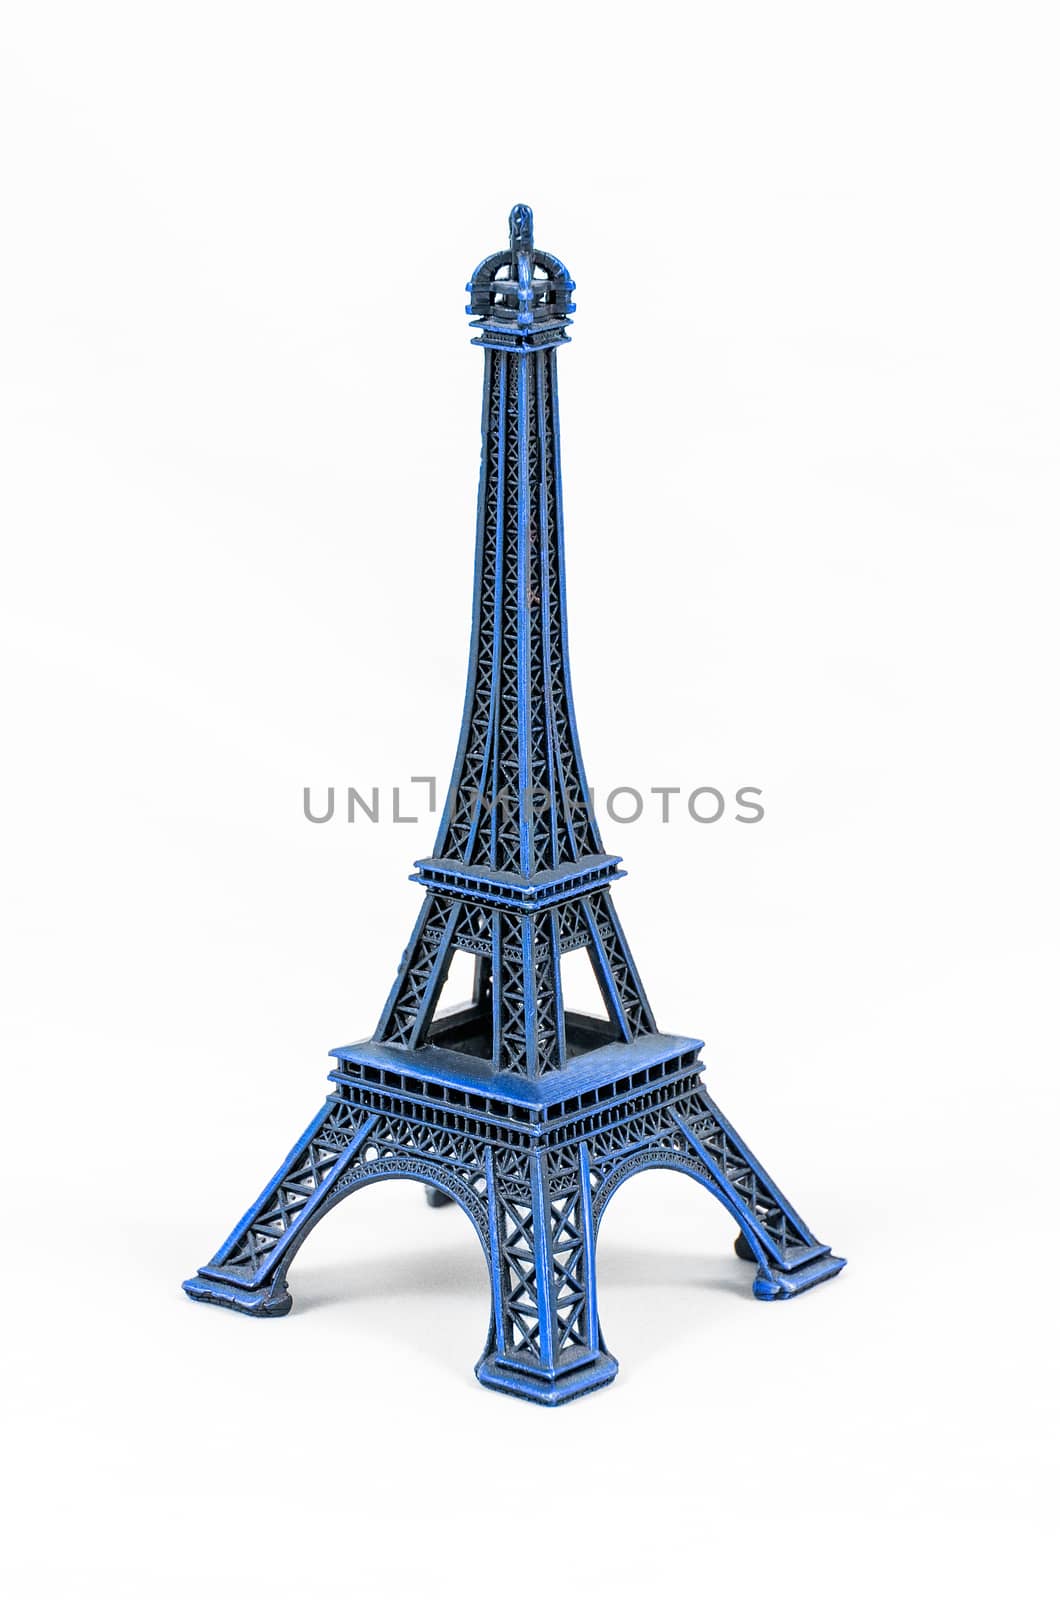 Blue Eiffel Tower model, isolated on white background by marcorubino